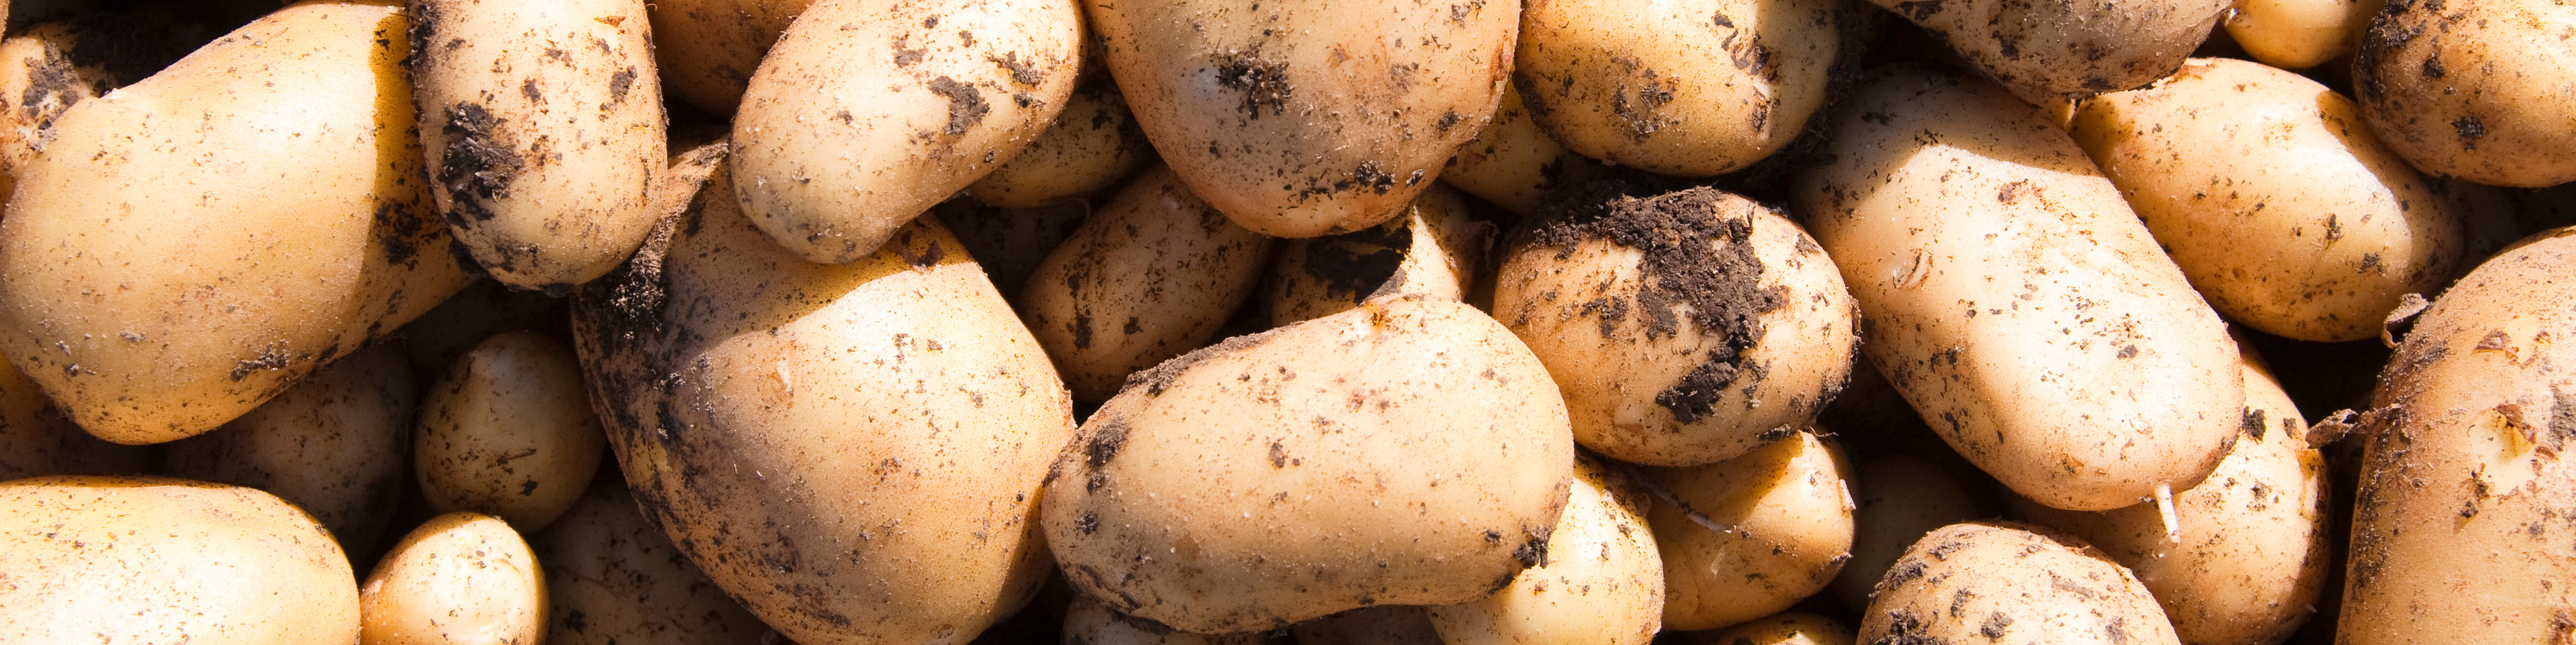 bushel of potatoes